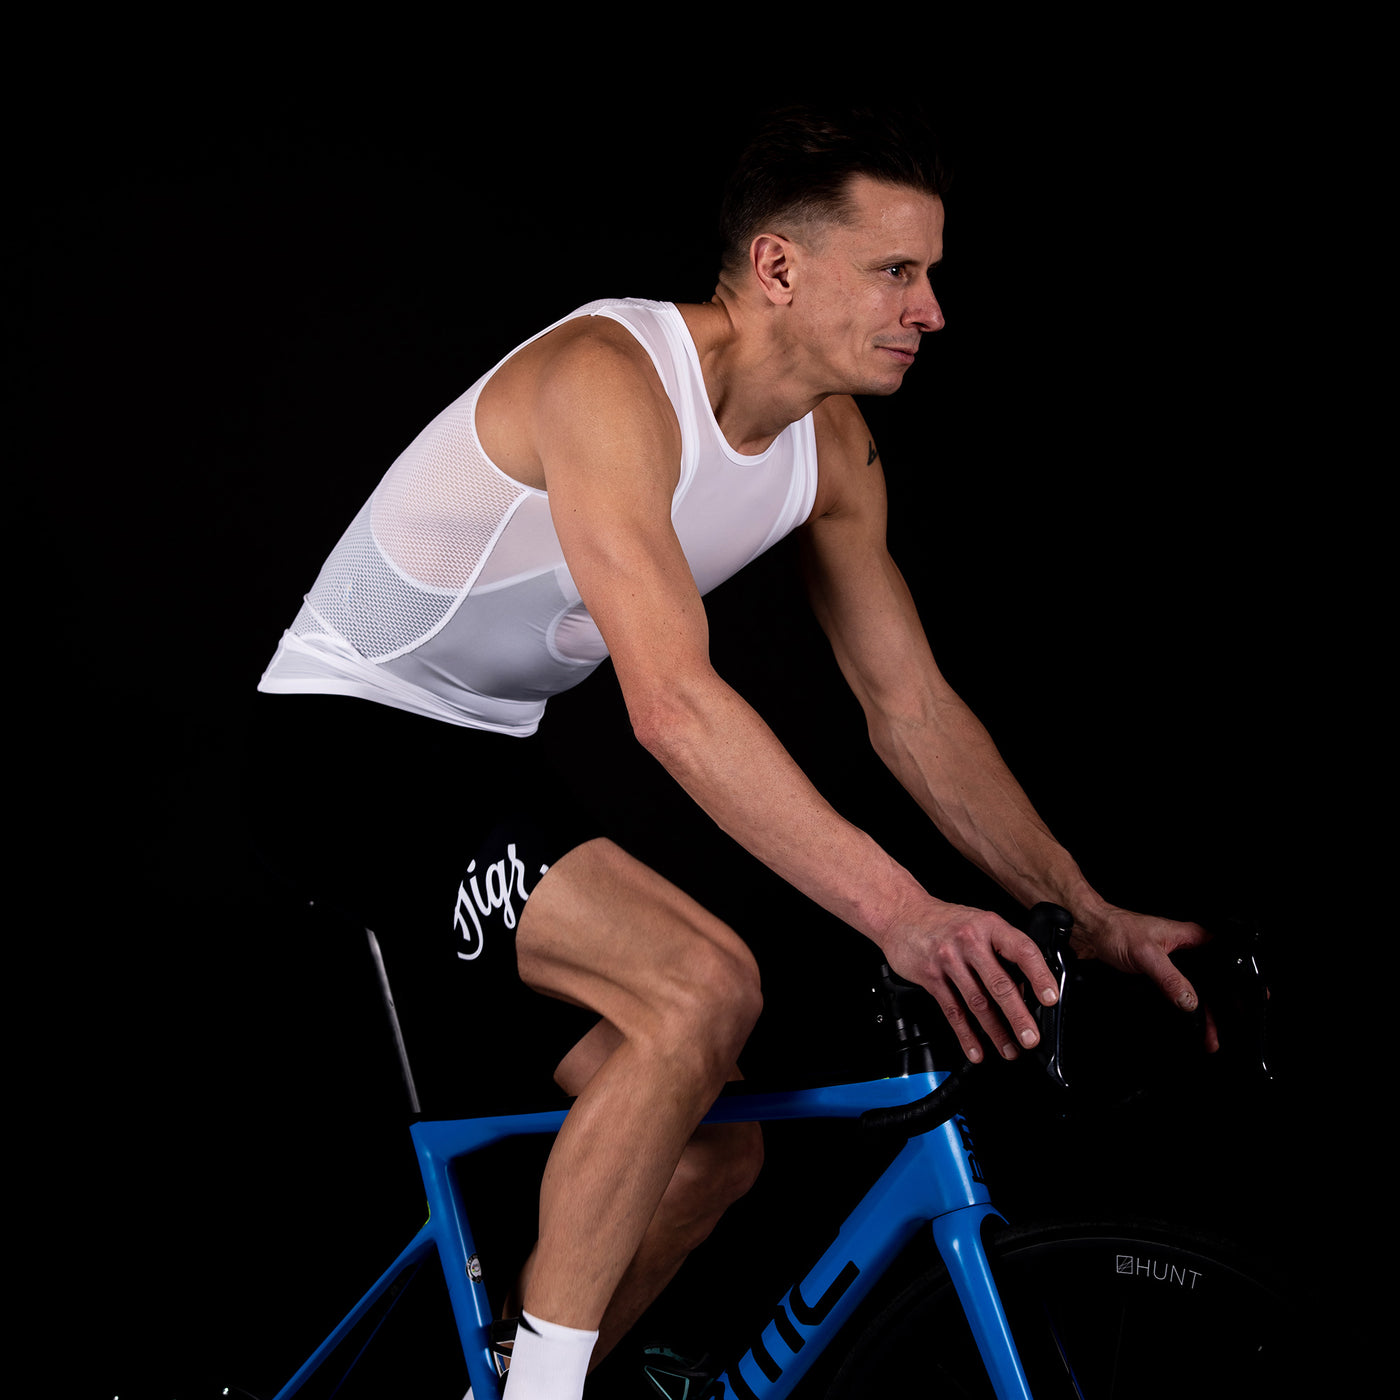 Sigr Landsväg - longer on your leg - Cycling Bib Shorts for Men